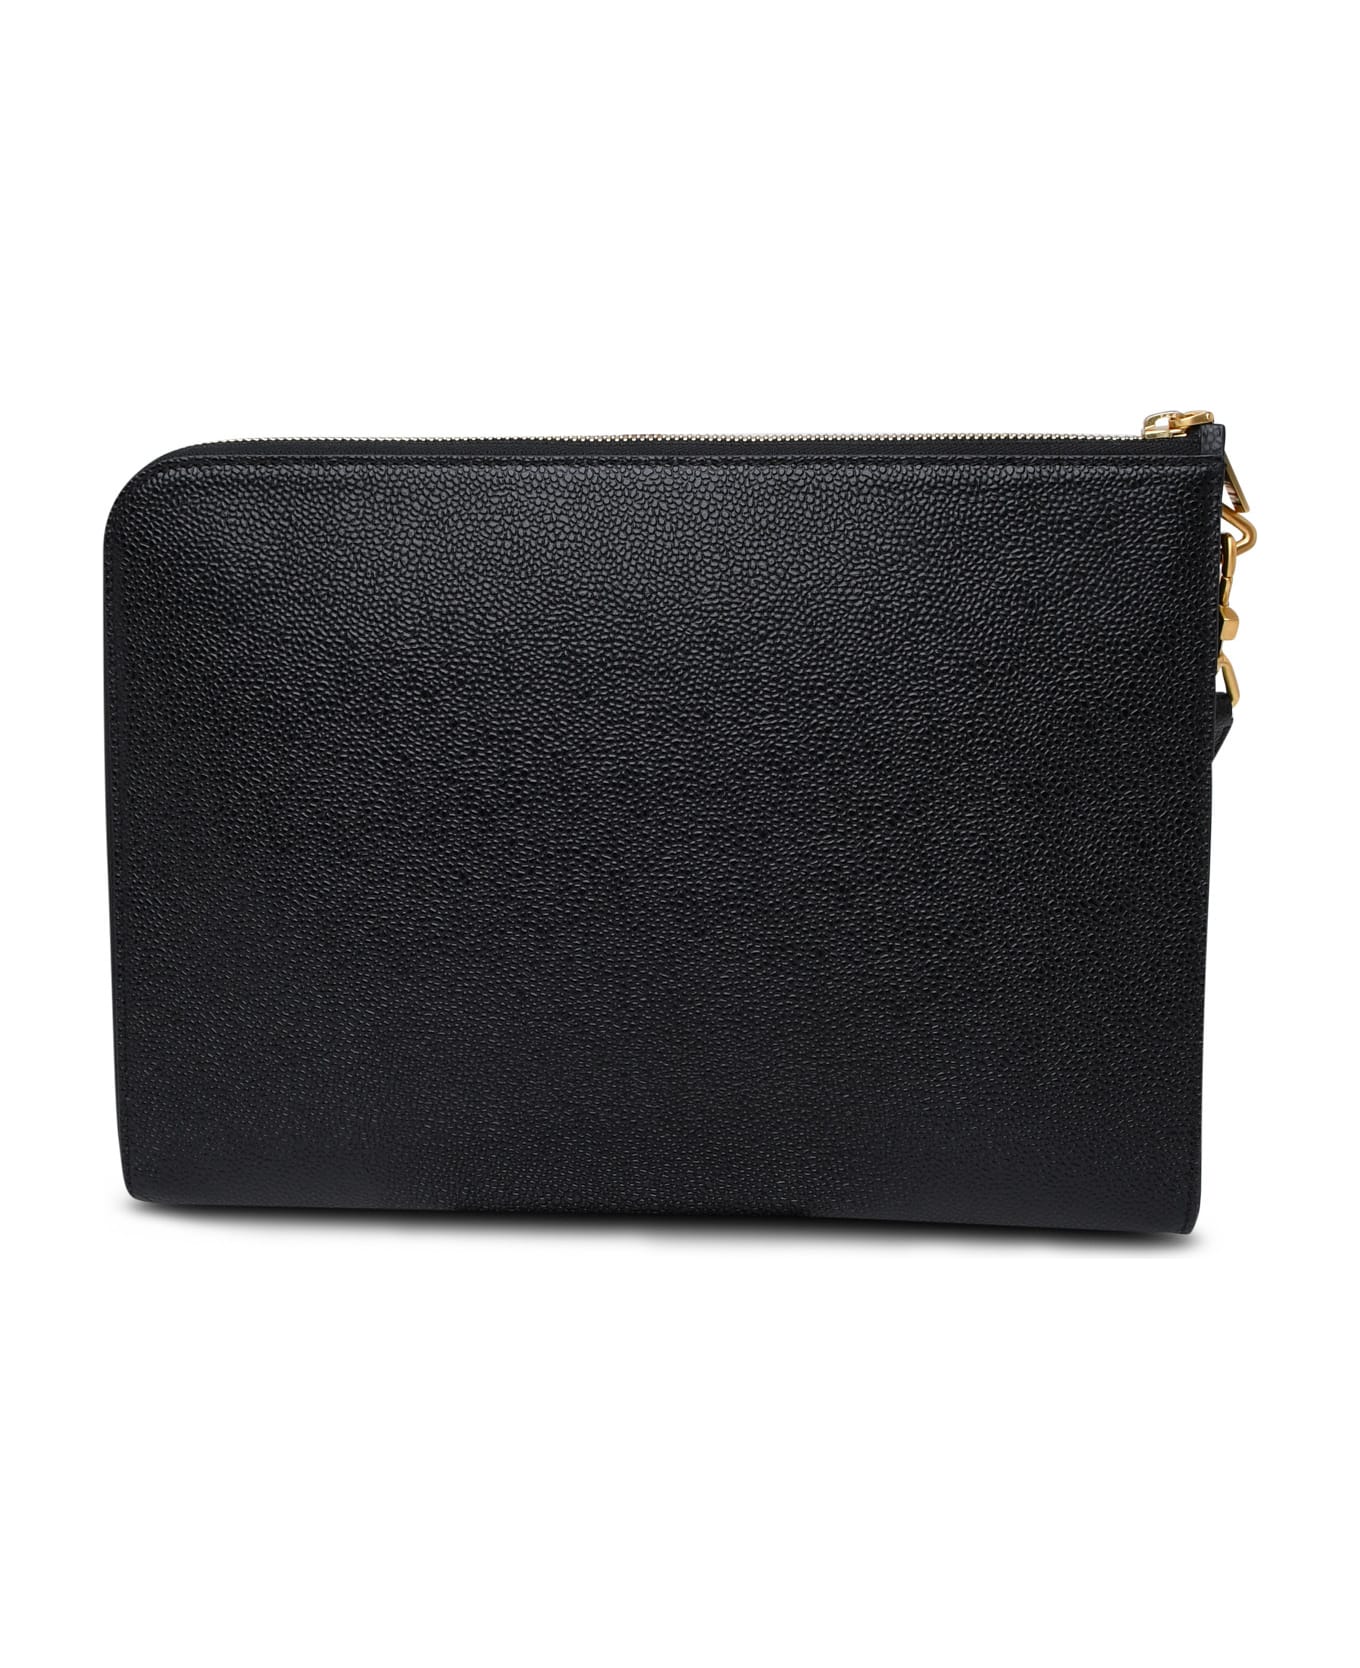 Thom Browne Medium Clutch Bag In Black Leather - Black バッグ